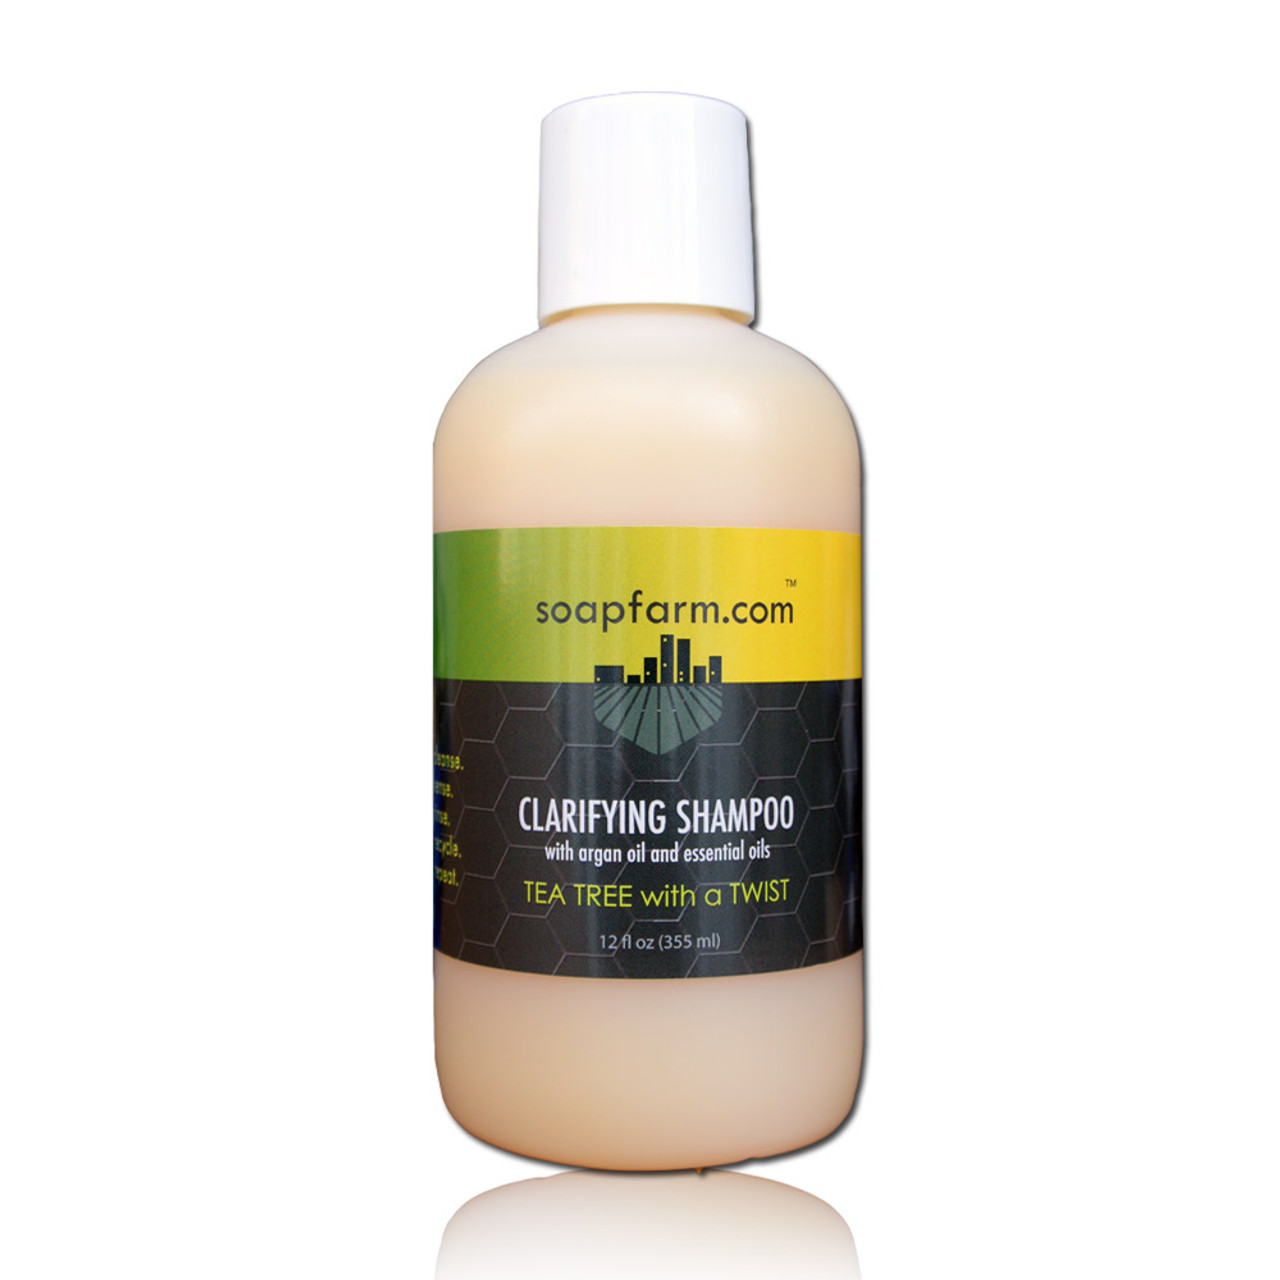 The Clarifying Shampoo Sulfate Free